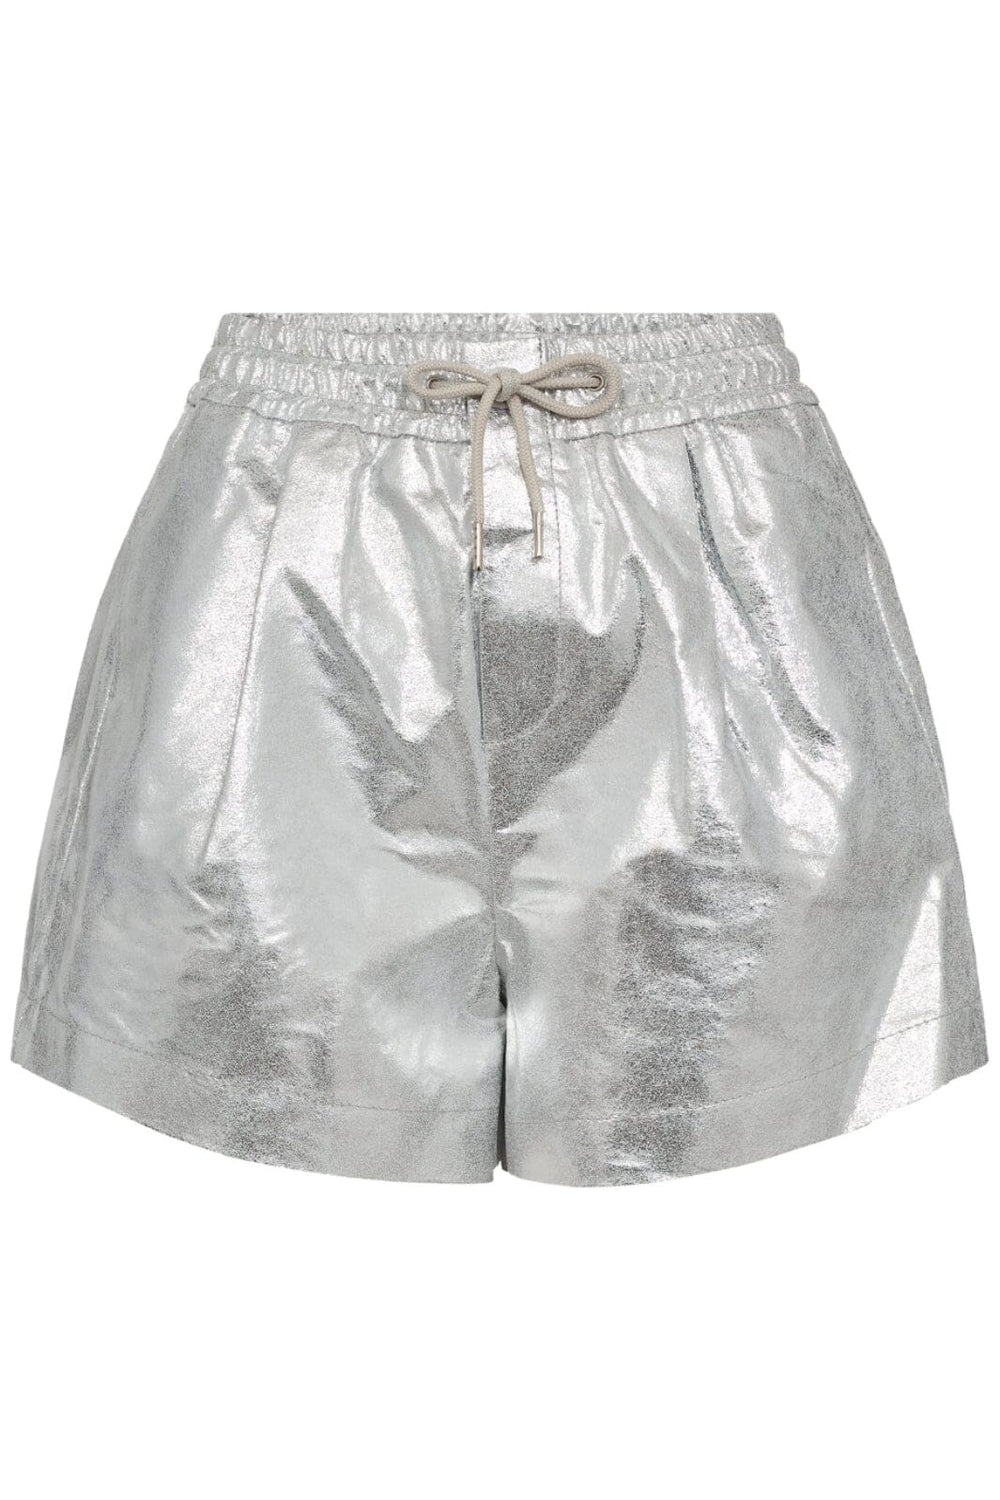 Forudbestilling - Co´couture - Phoebecc Crackle Shorts 31260 - 930 Silver Shorts 